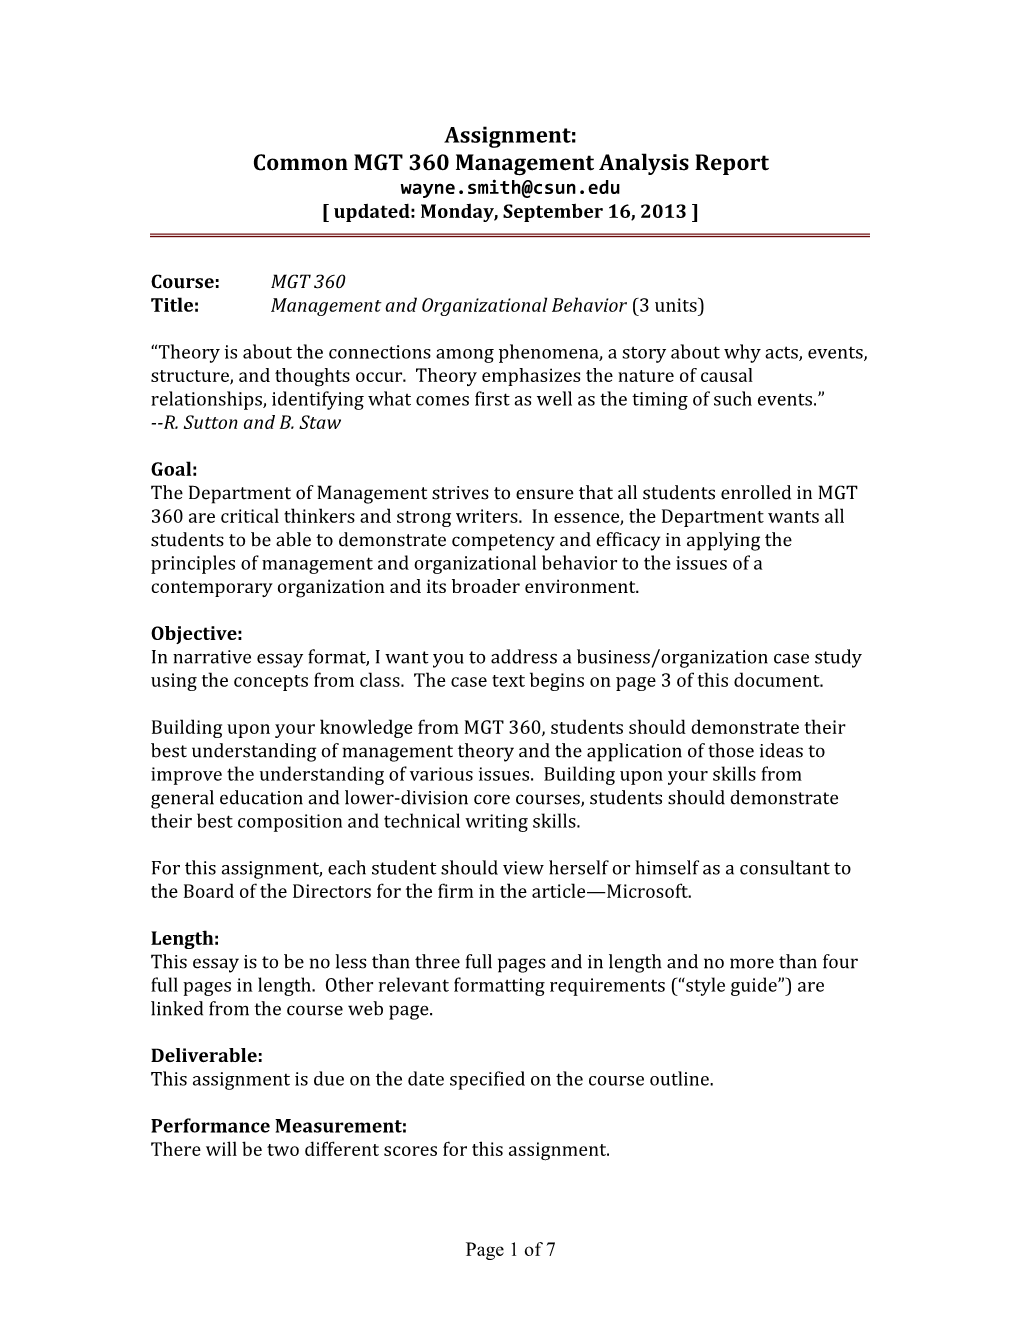 Assignment: Common MGT 360 Management Analysis Report Wayne.Smith@Csun.Edu [ Updated: Monday, September 16, 2013 ]